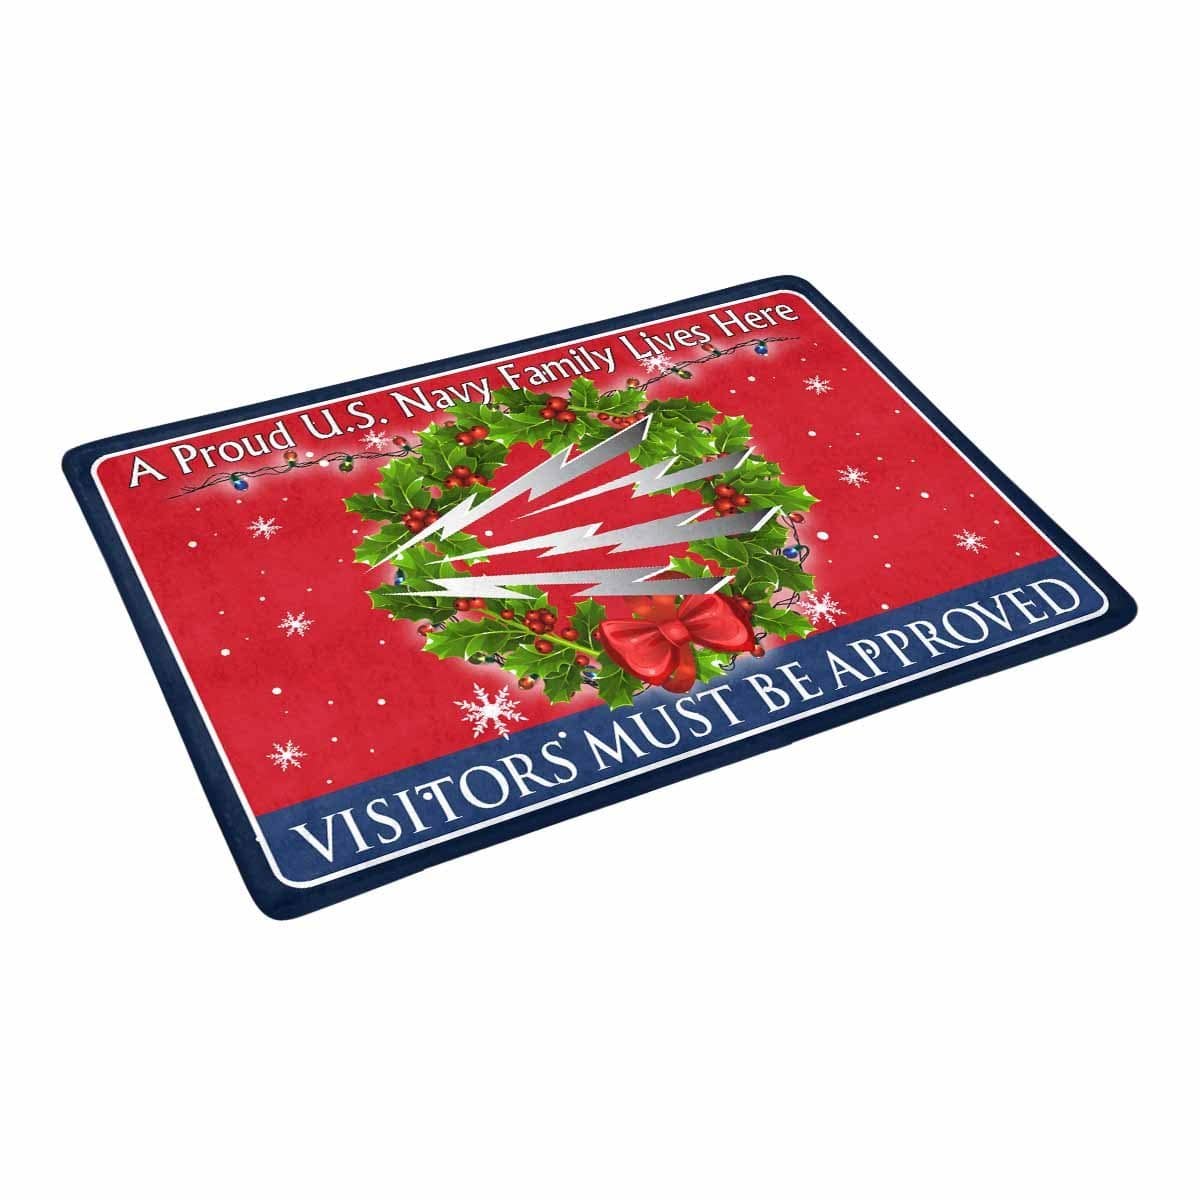 U.S Navy Radioman Navy RM - Visitors must be approved - Christmas Doormat-Doormat-Navy-Rate-Veterans Nation